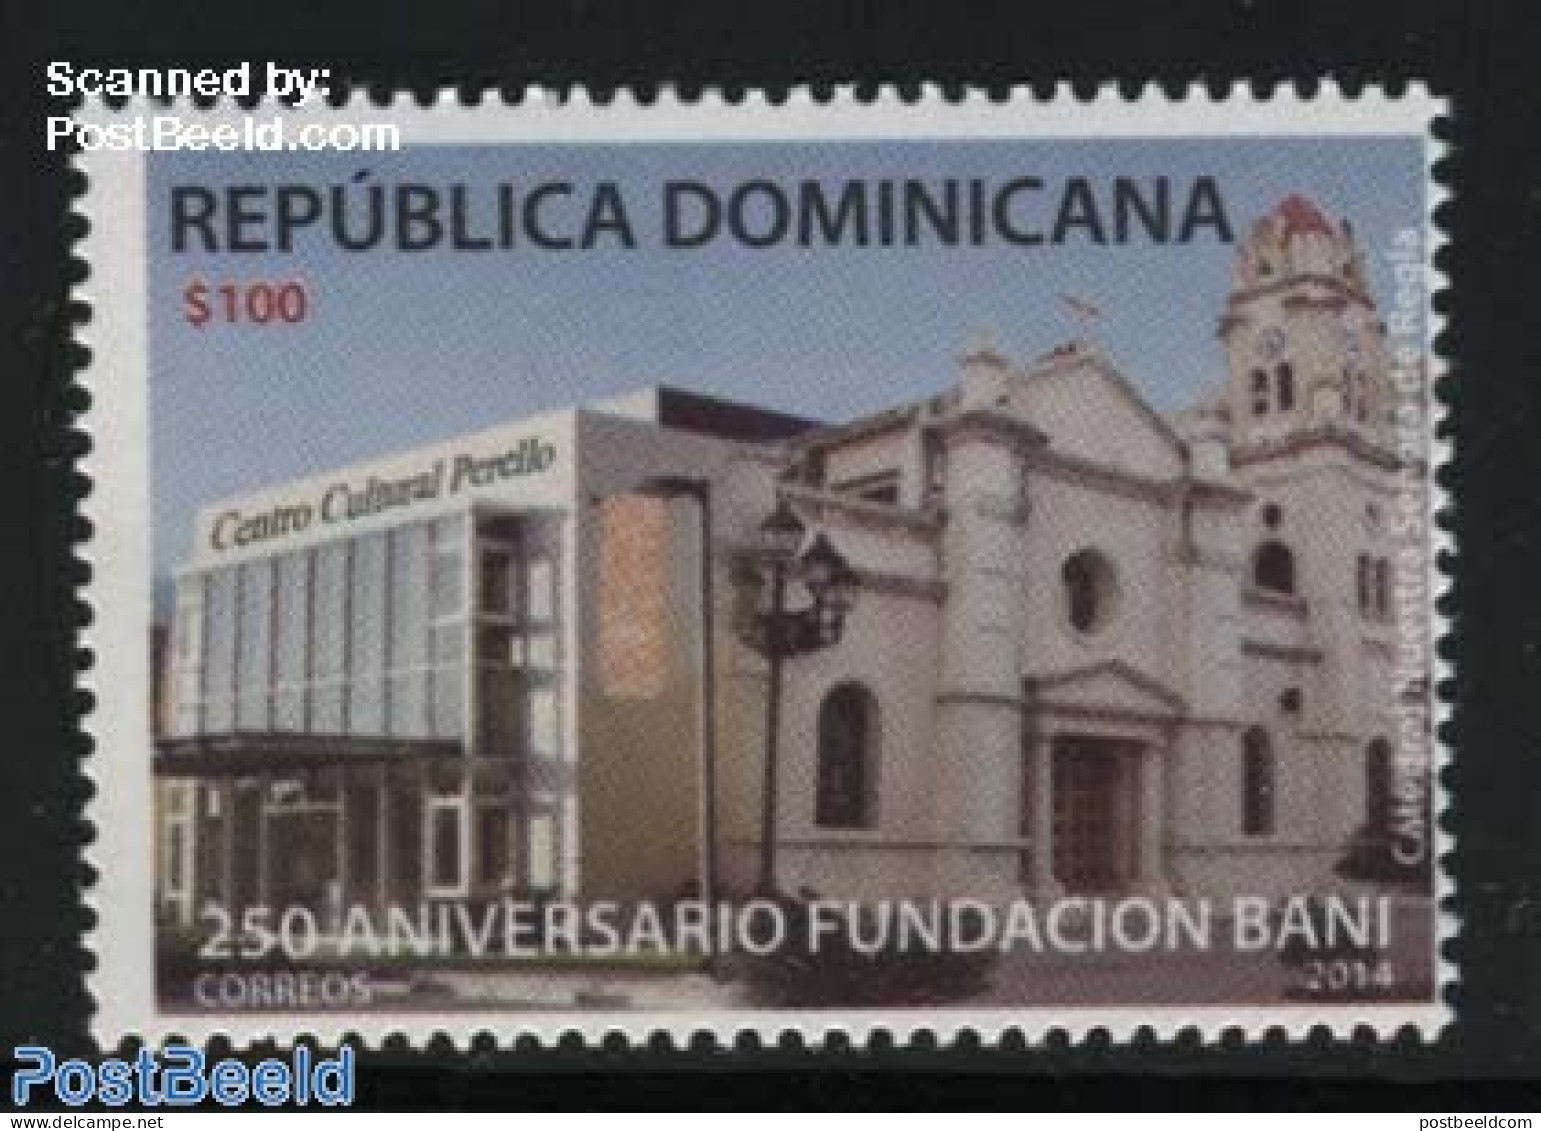 Dominican Republic 2015 Fundacion Bani 1v, Mint NH, Religion - Churches, Temples, Mosques, Synagogues - Eglises Et Cathédrales